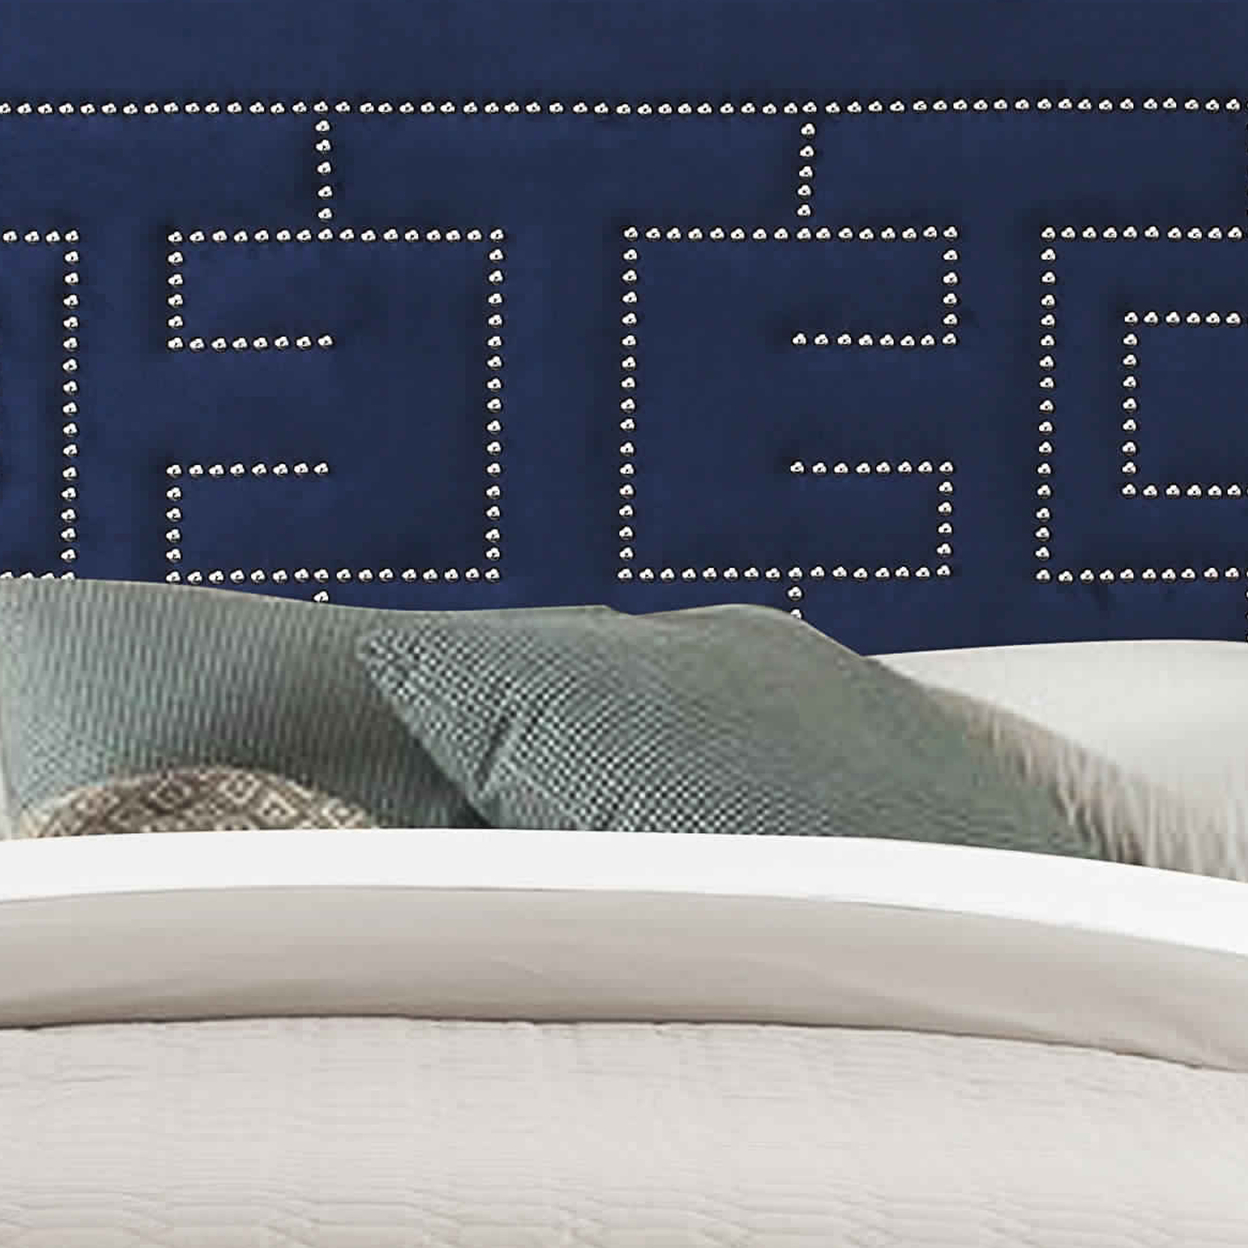 Fabric Eastern King Bed With Geometric Pattern Nailhead Trims, Blue- Saltoro Sherpi